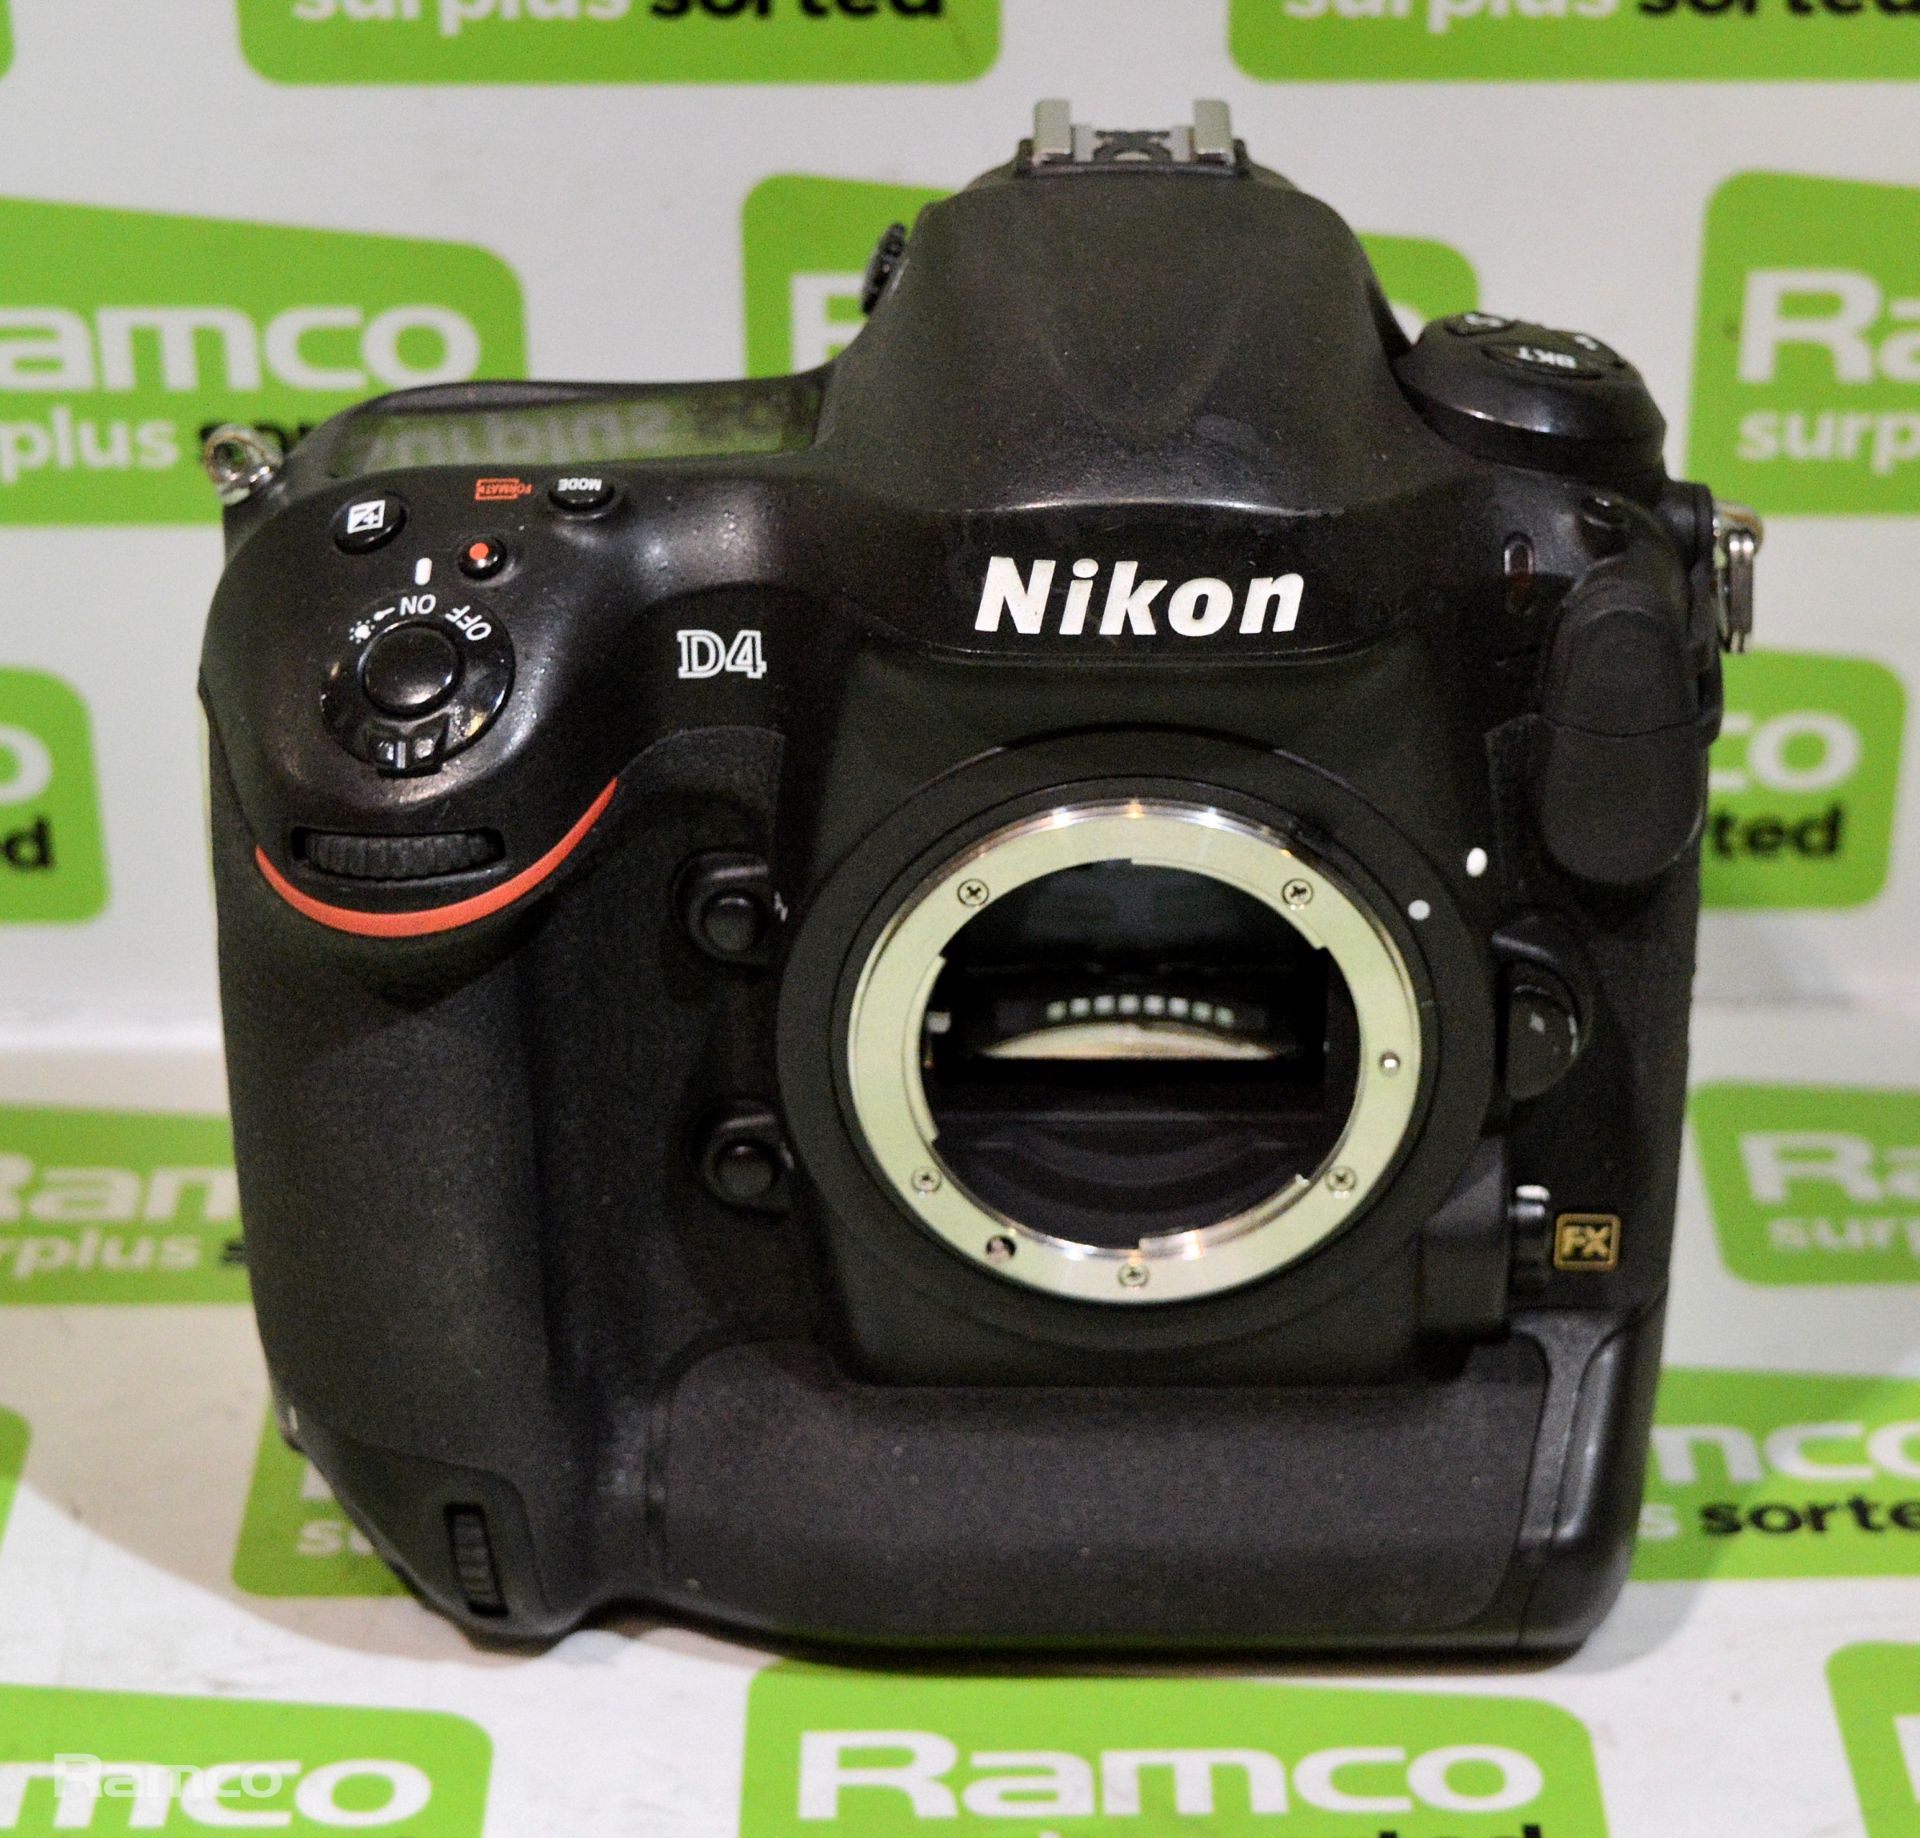 Nikon D4 digital SLR camera body, no battery